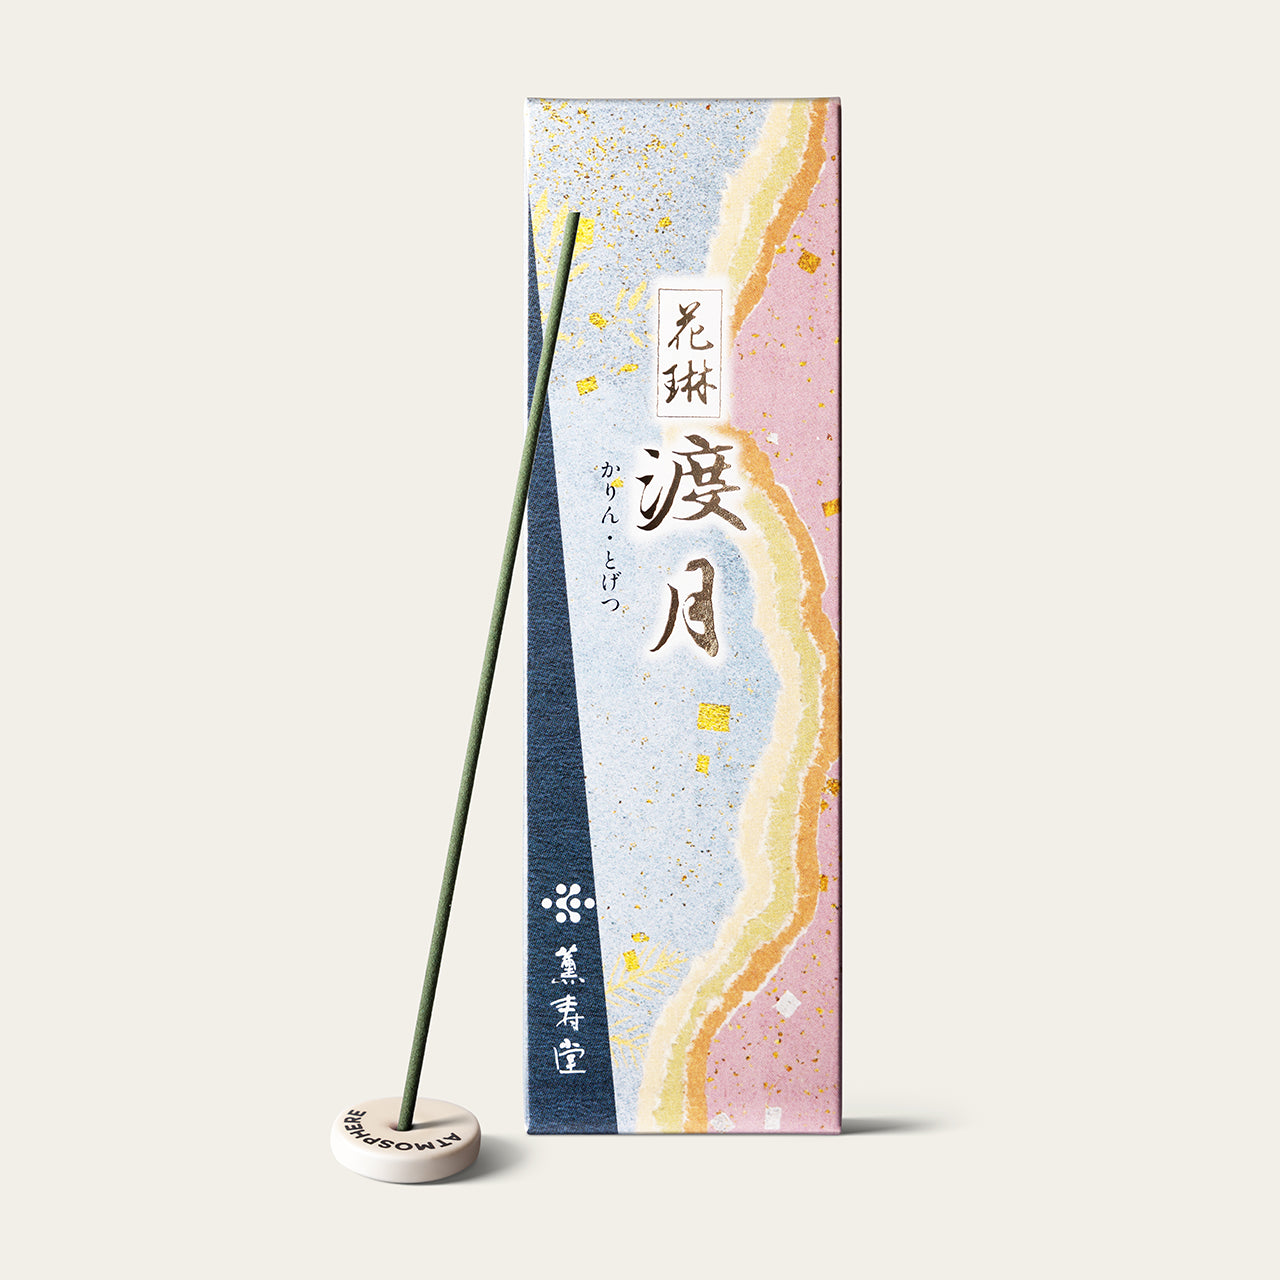 Kunjudo Moonlit Trail Karin Togetsu Japanese incense sticks (80 sticks) with Atmosphere ceramic incense holder